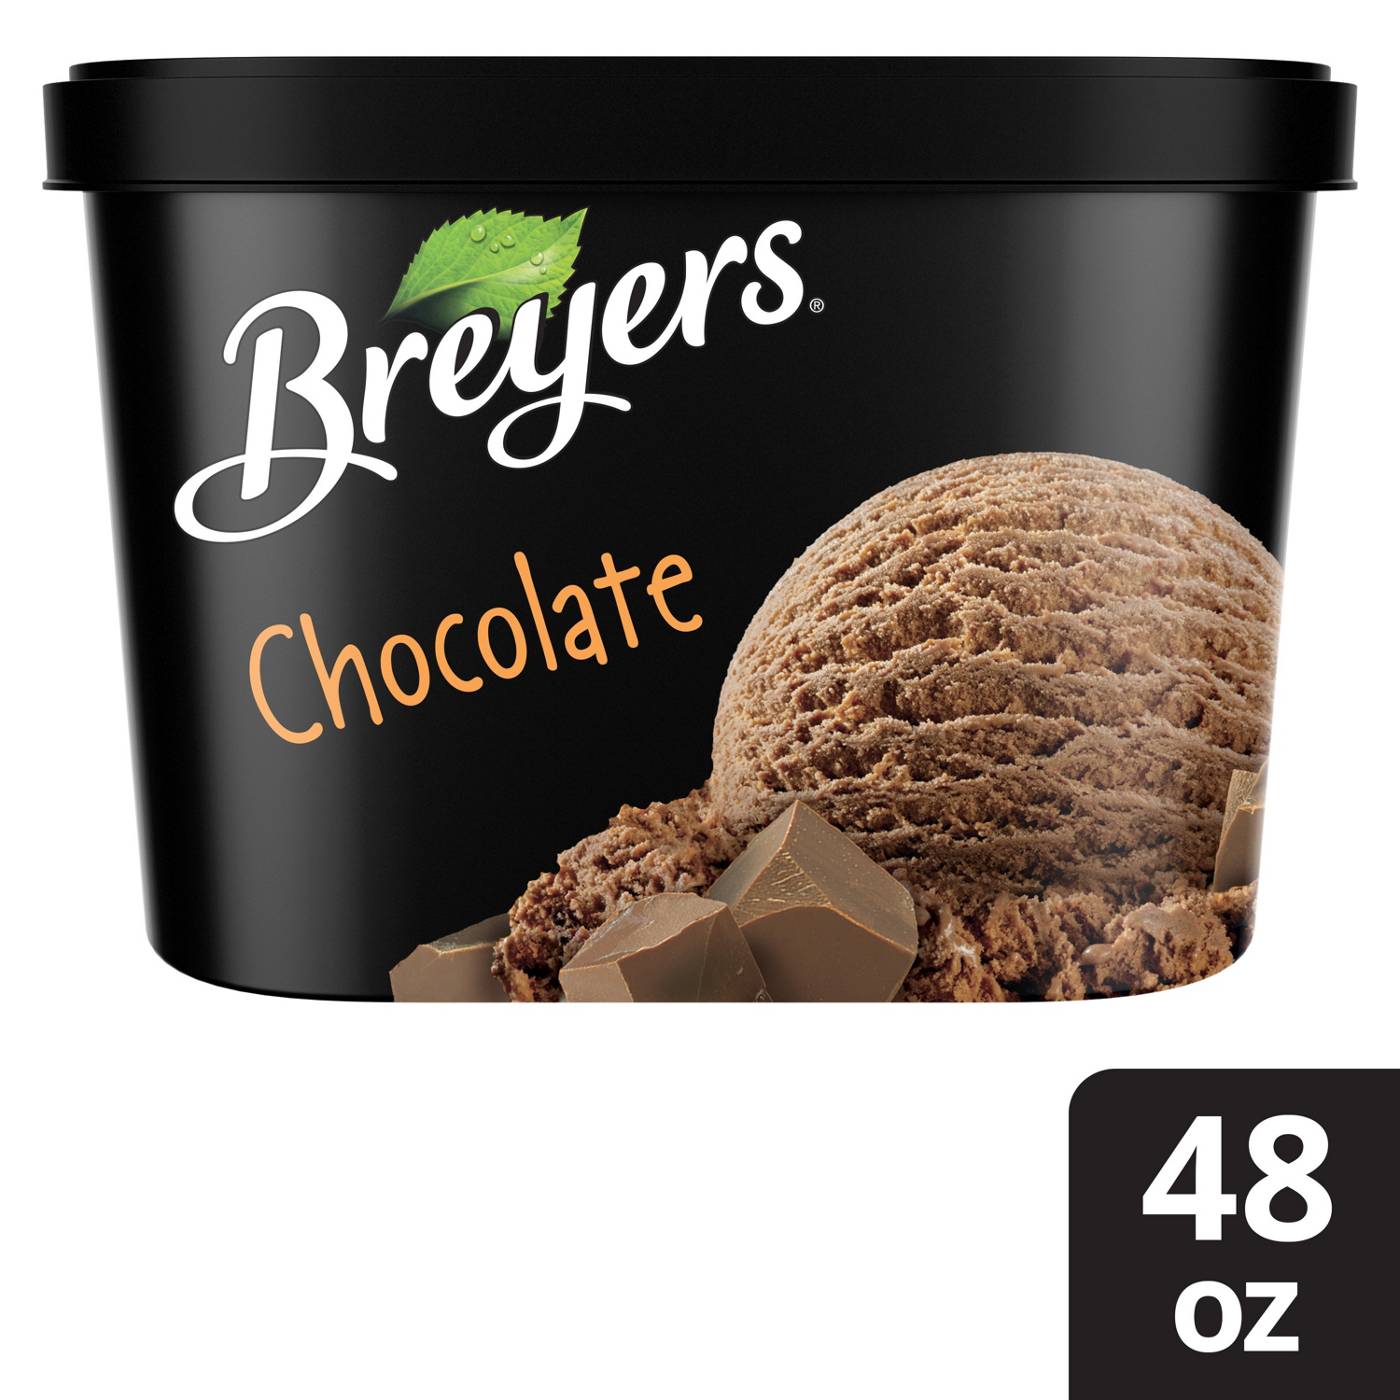 Breyers Chocolate Ice Cream; image 2 of 8